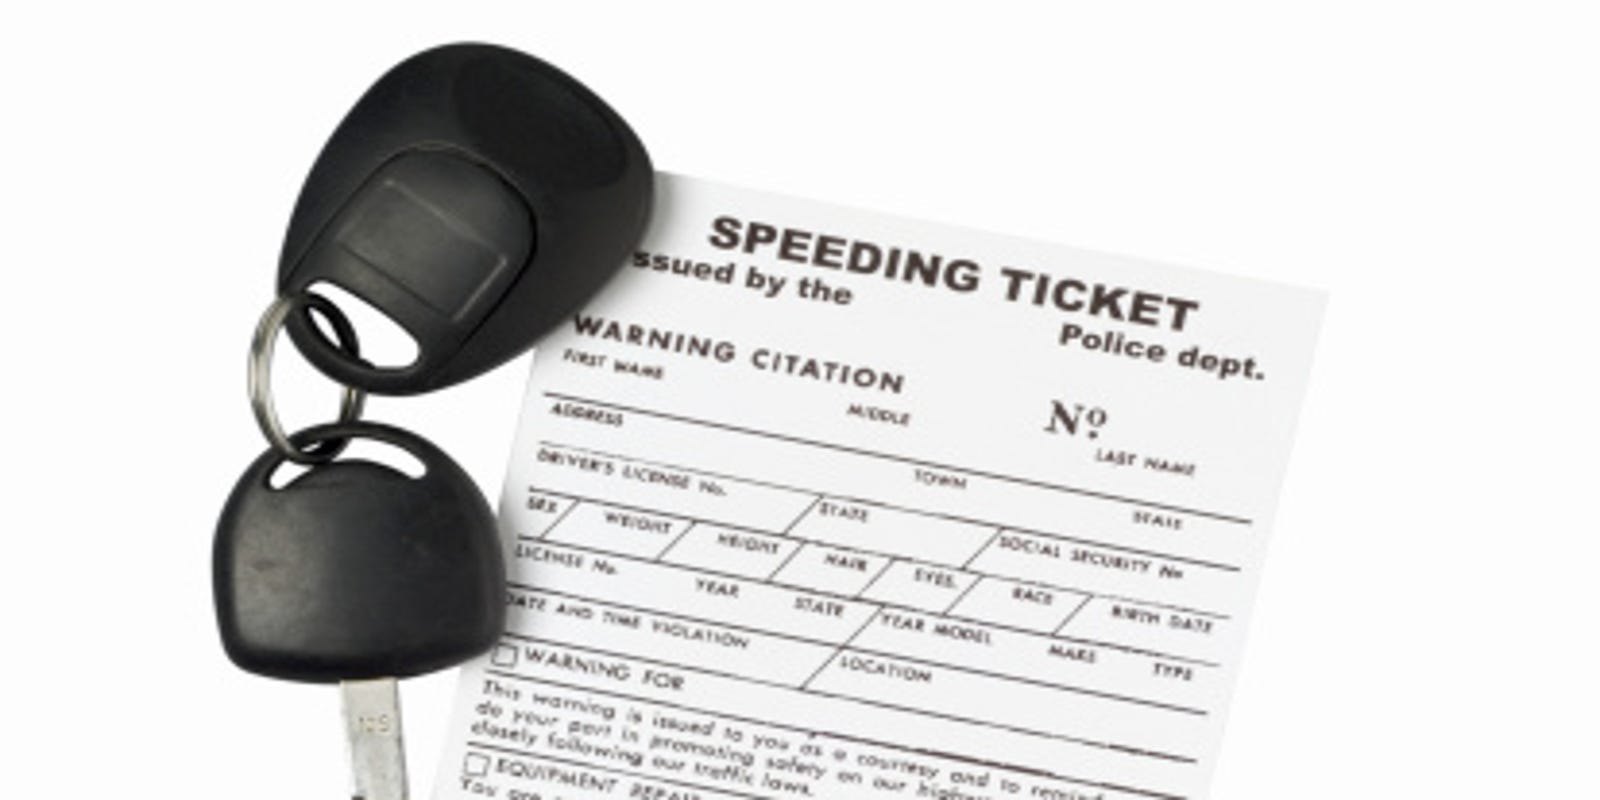 Переведи ticket. Speeding ticket. Traffic ticket. Ticket перевод. Traffic ticket for speeding USA.